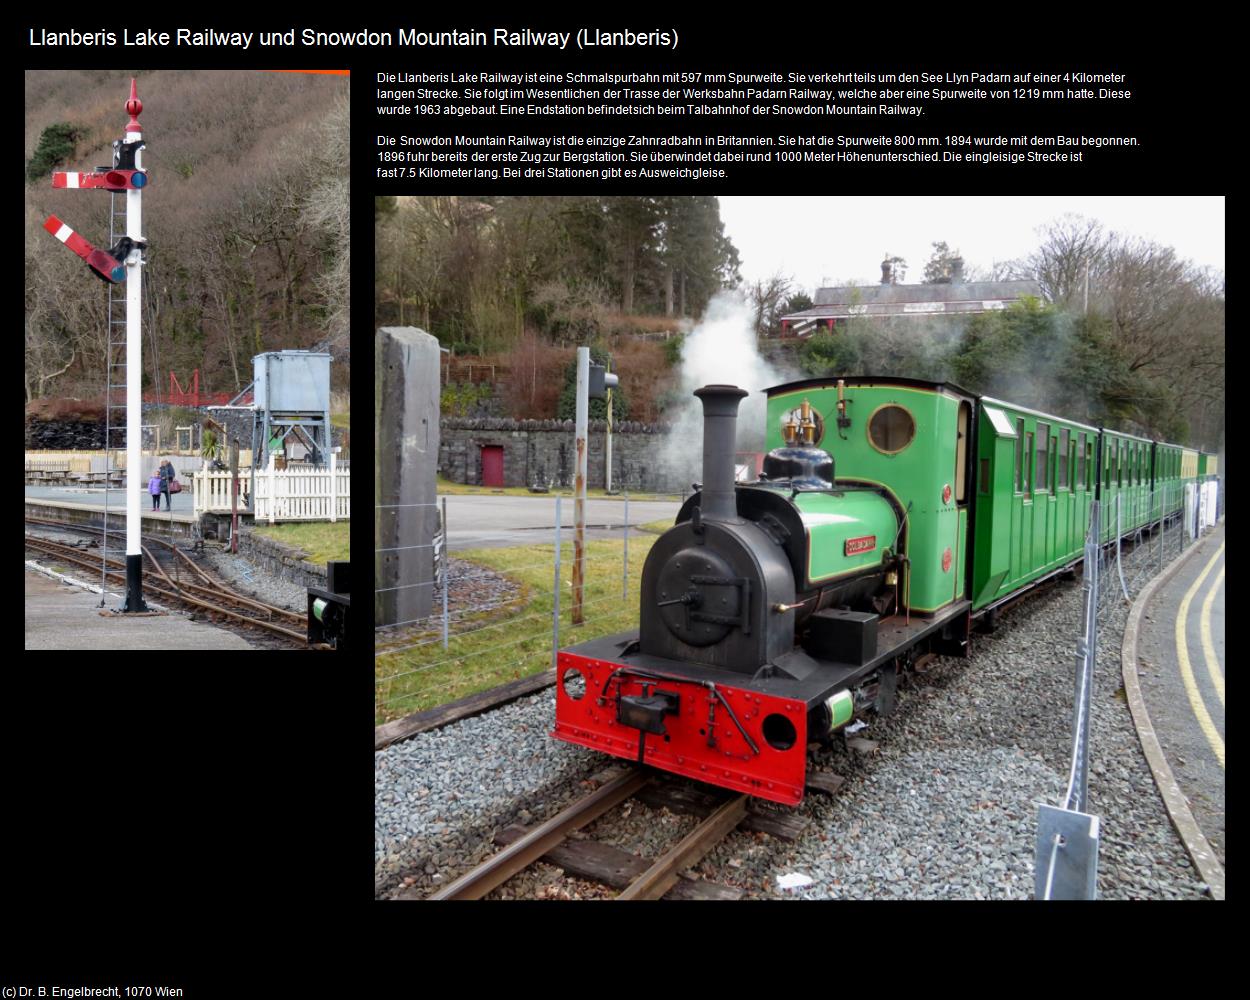 Llanberis Lake Railway und Snowdon Mountain Railway (Llanberis, Wales) in Kulturatlas-ENGLAND und WALES